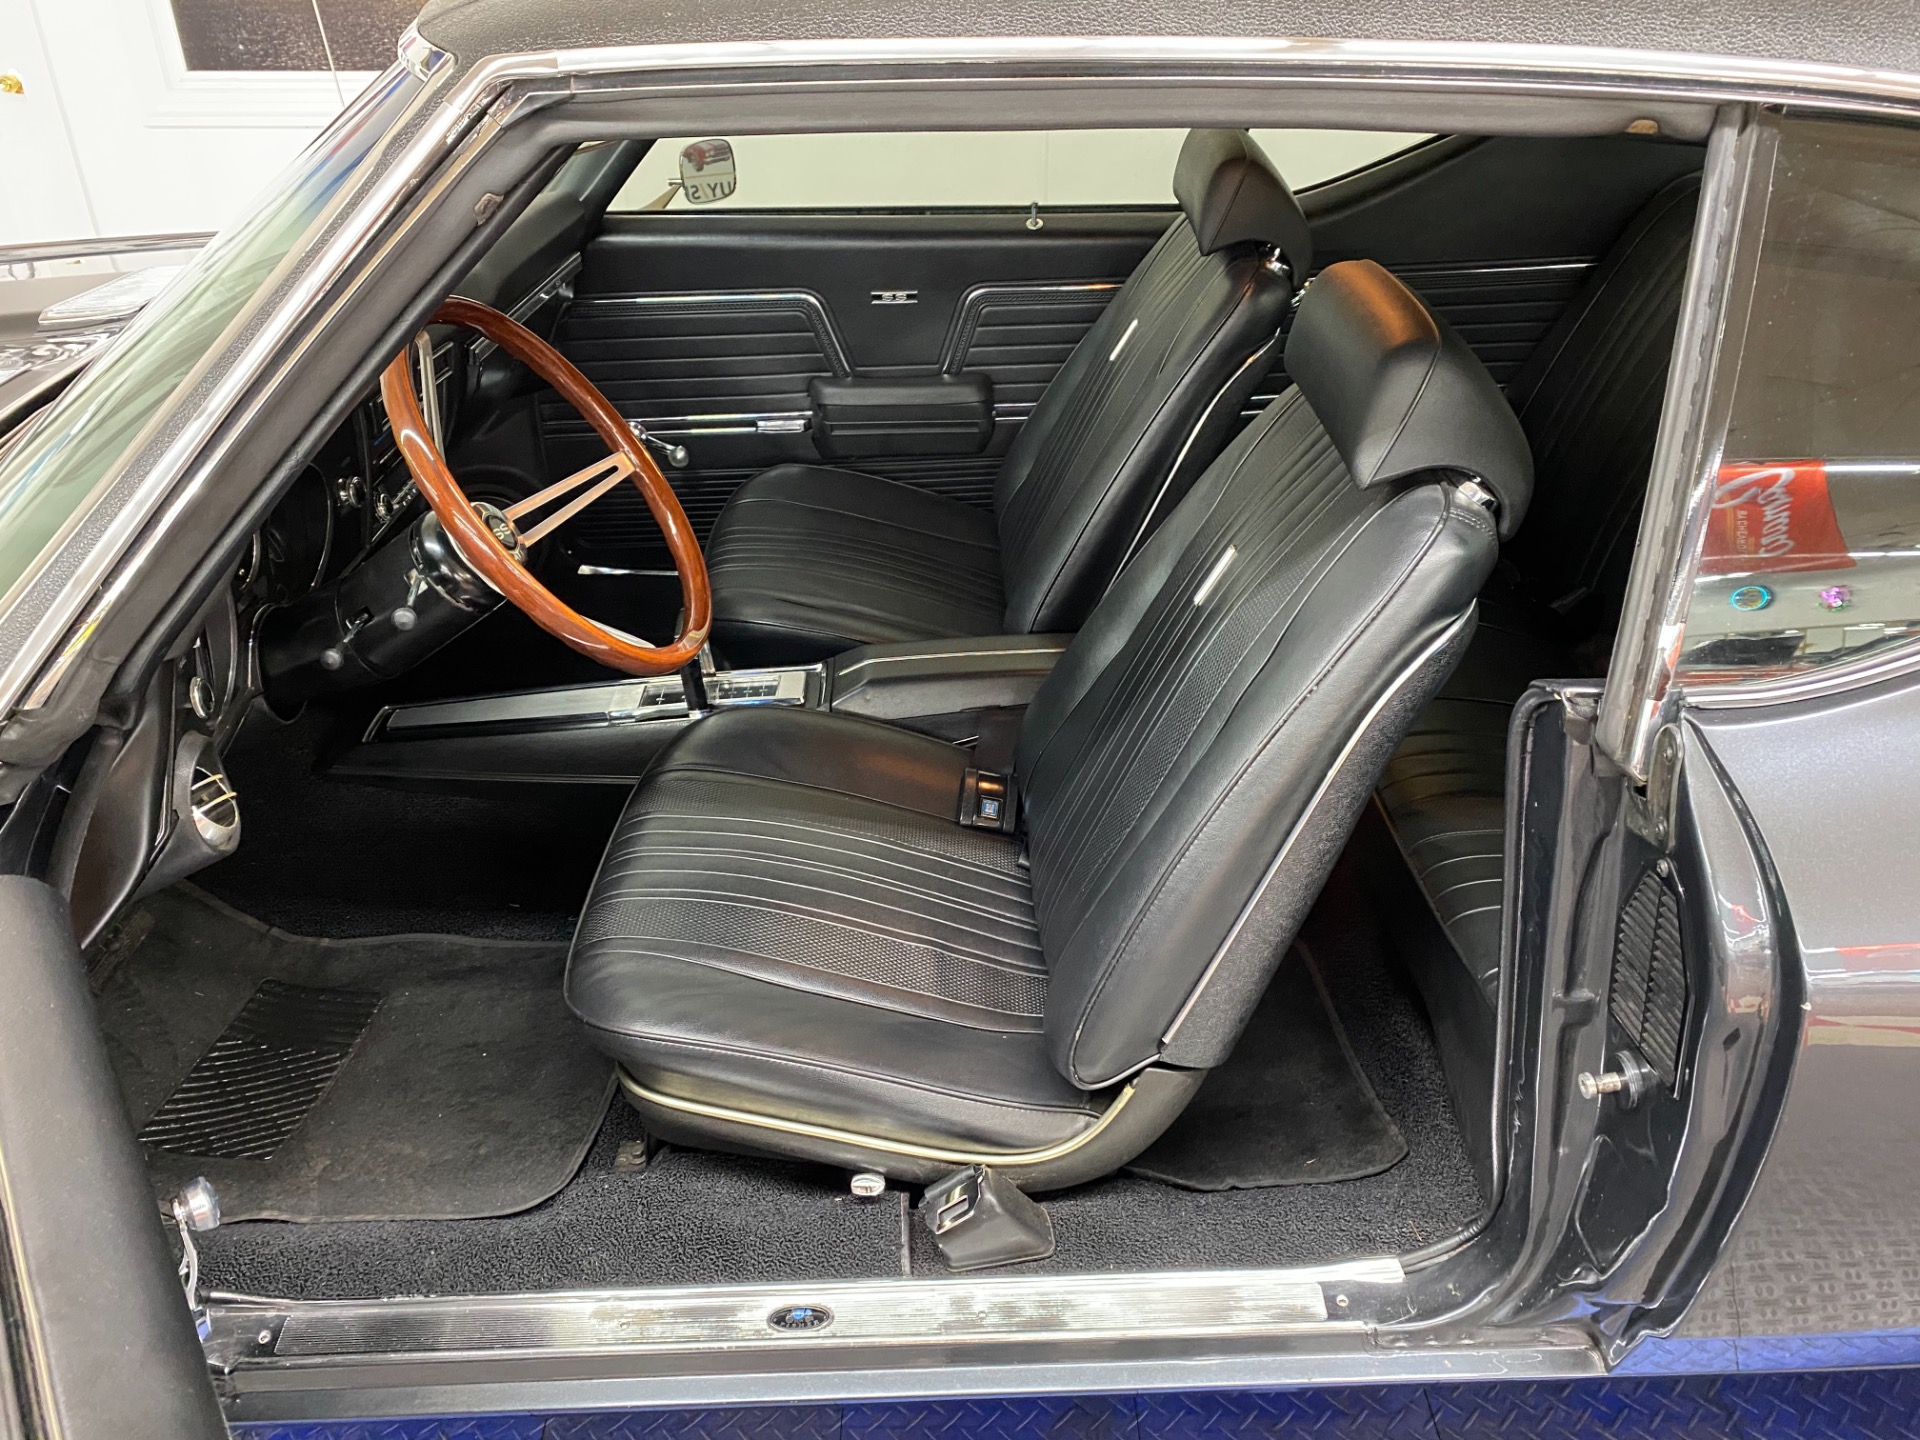 Used 1969 Chevrolet Chevelle - FRAME OFF RESTO MOD - 454 ENGINE - VINTAGE AIR - SEE VIDEO - | Mundelein, IL